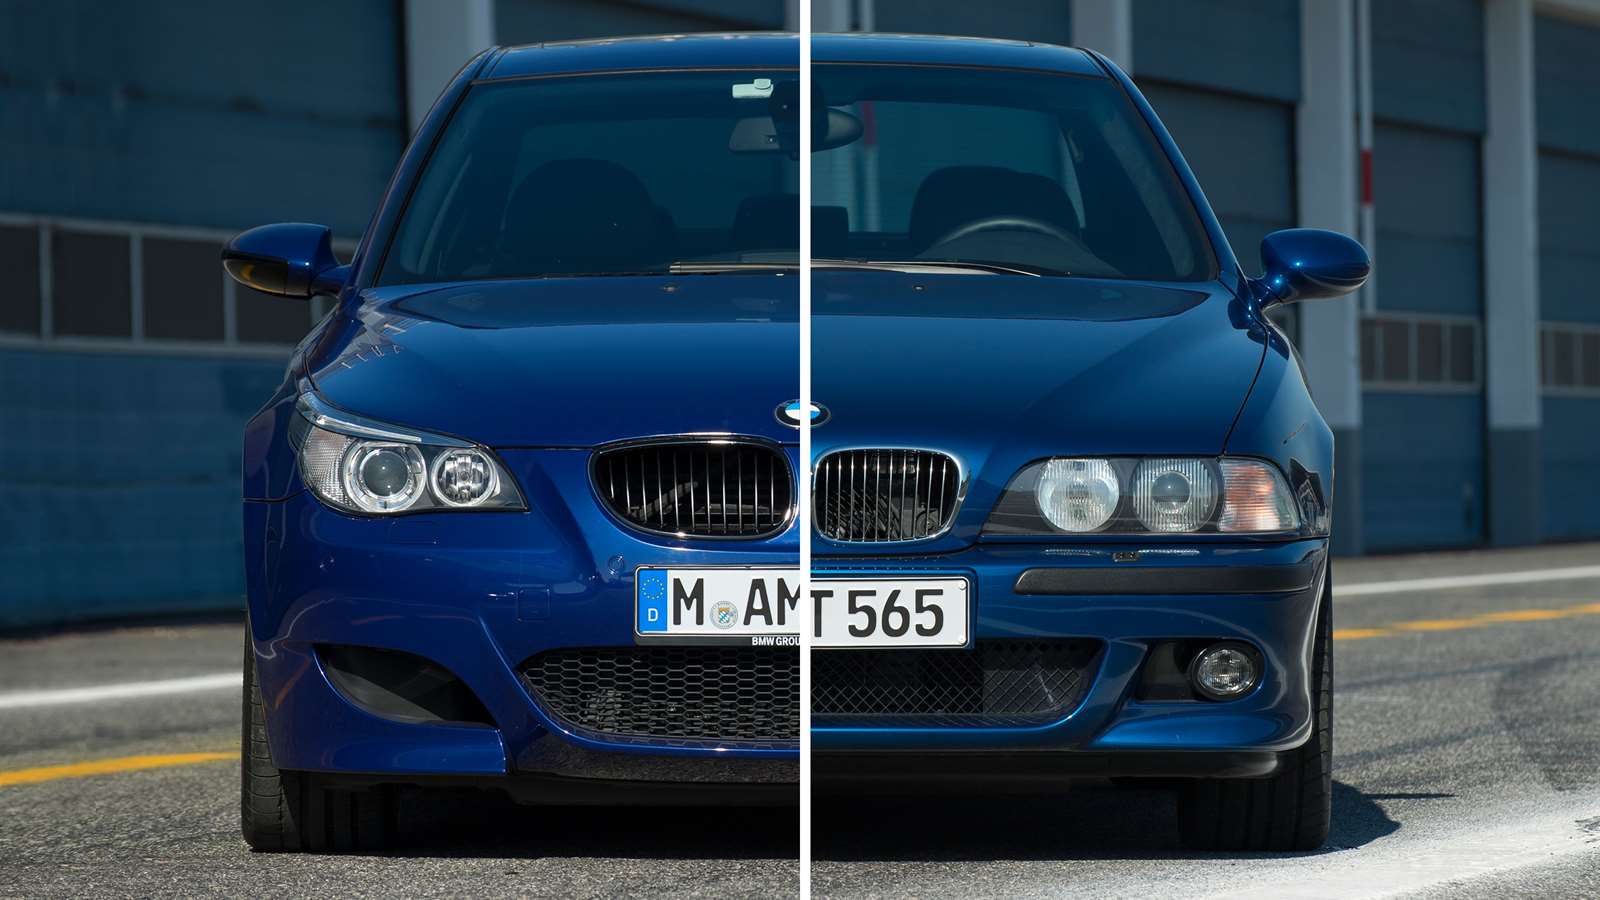 BMW M5 (2005) - pictures, information & specs